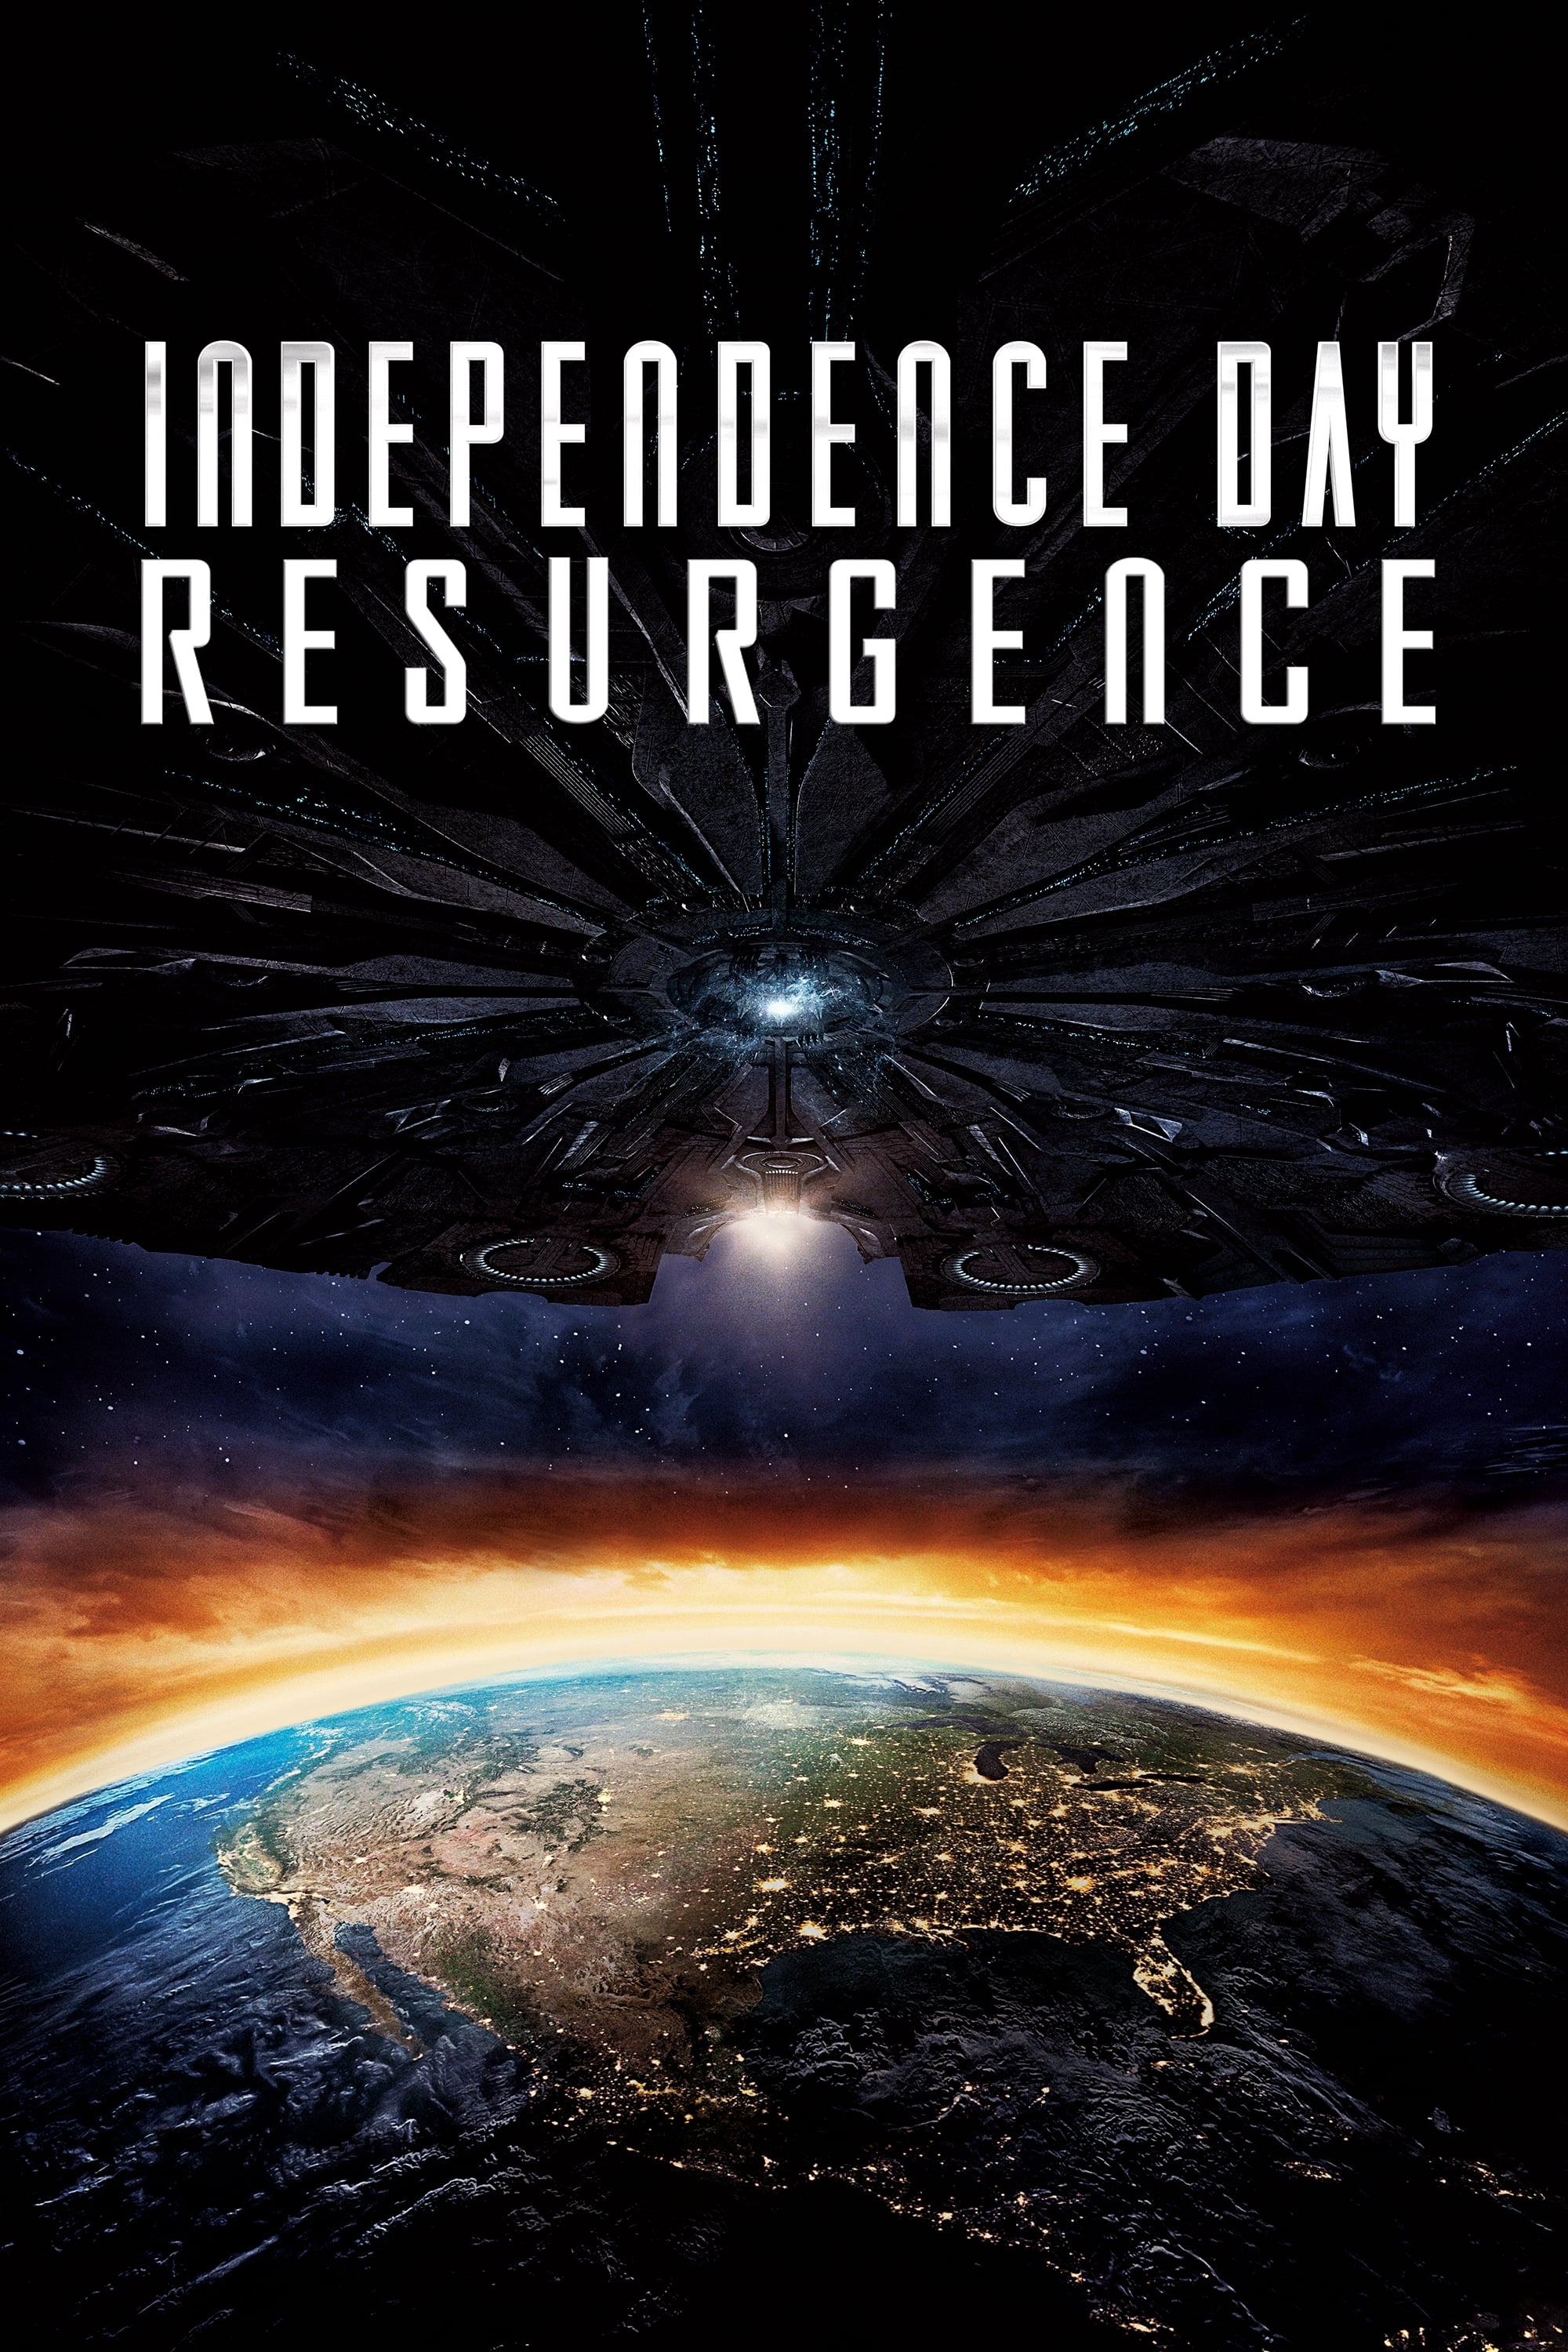 Independence Day : Resurgence